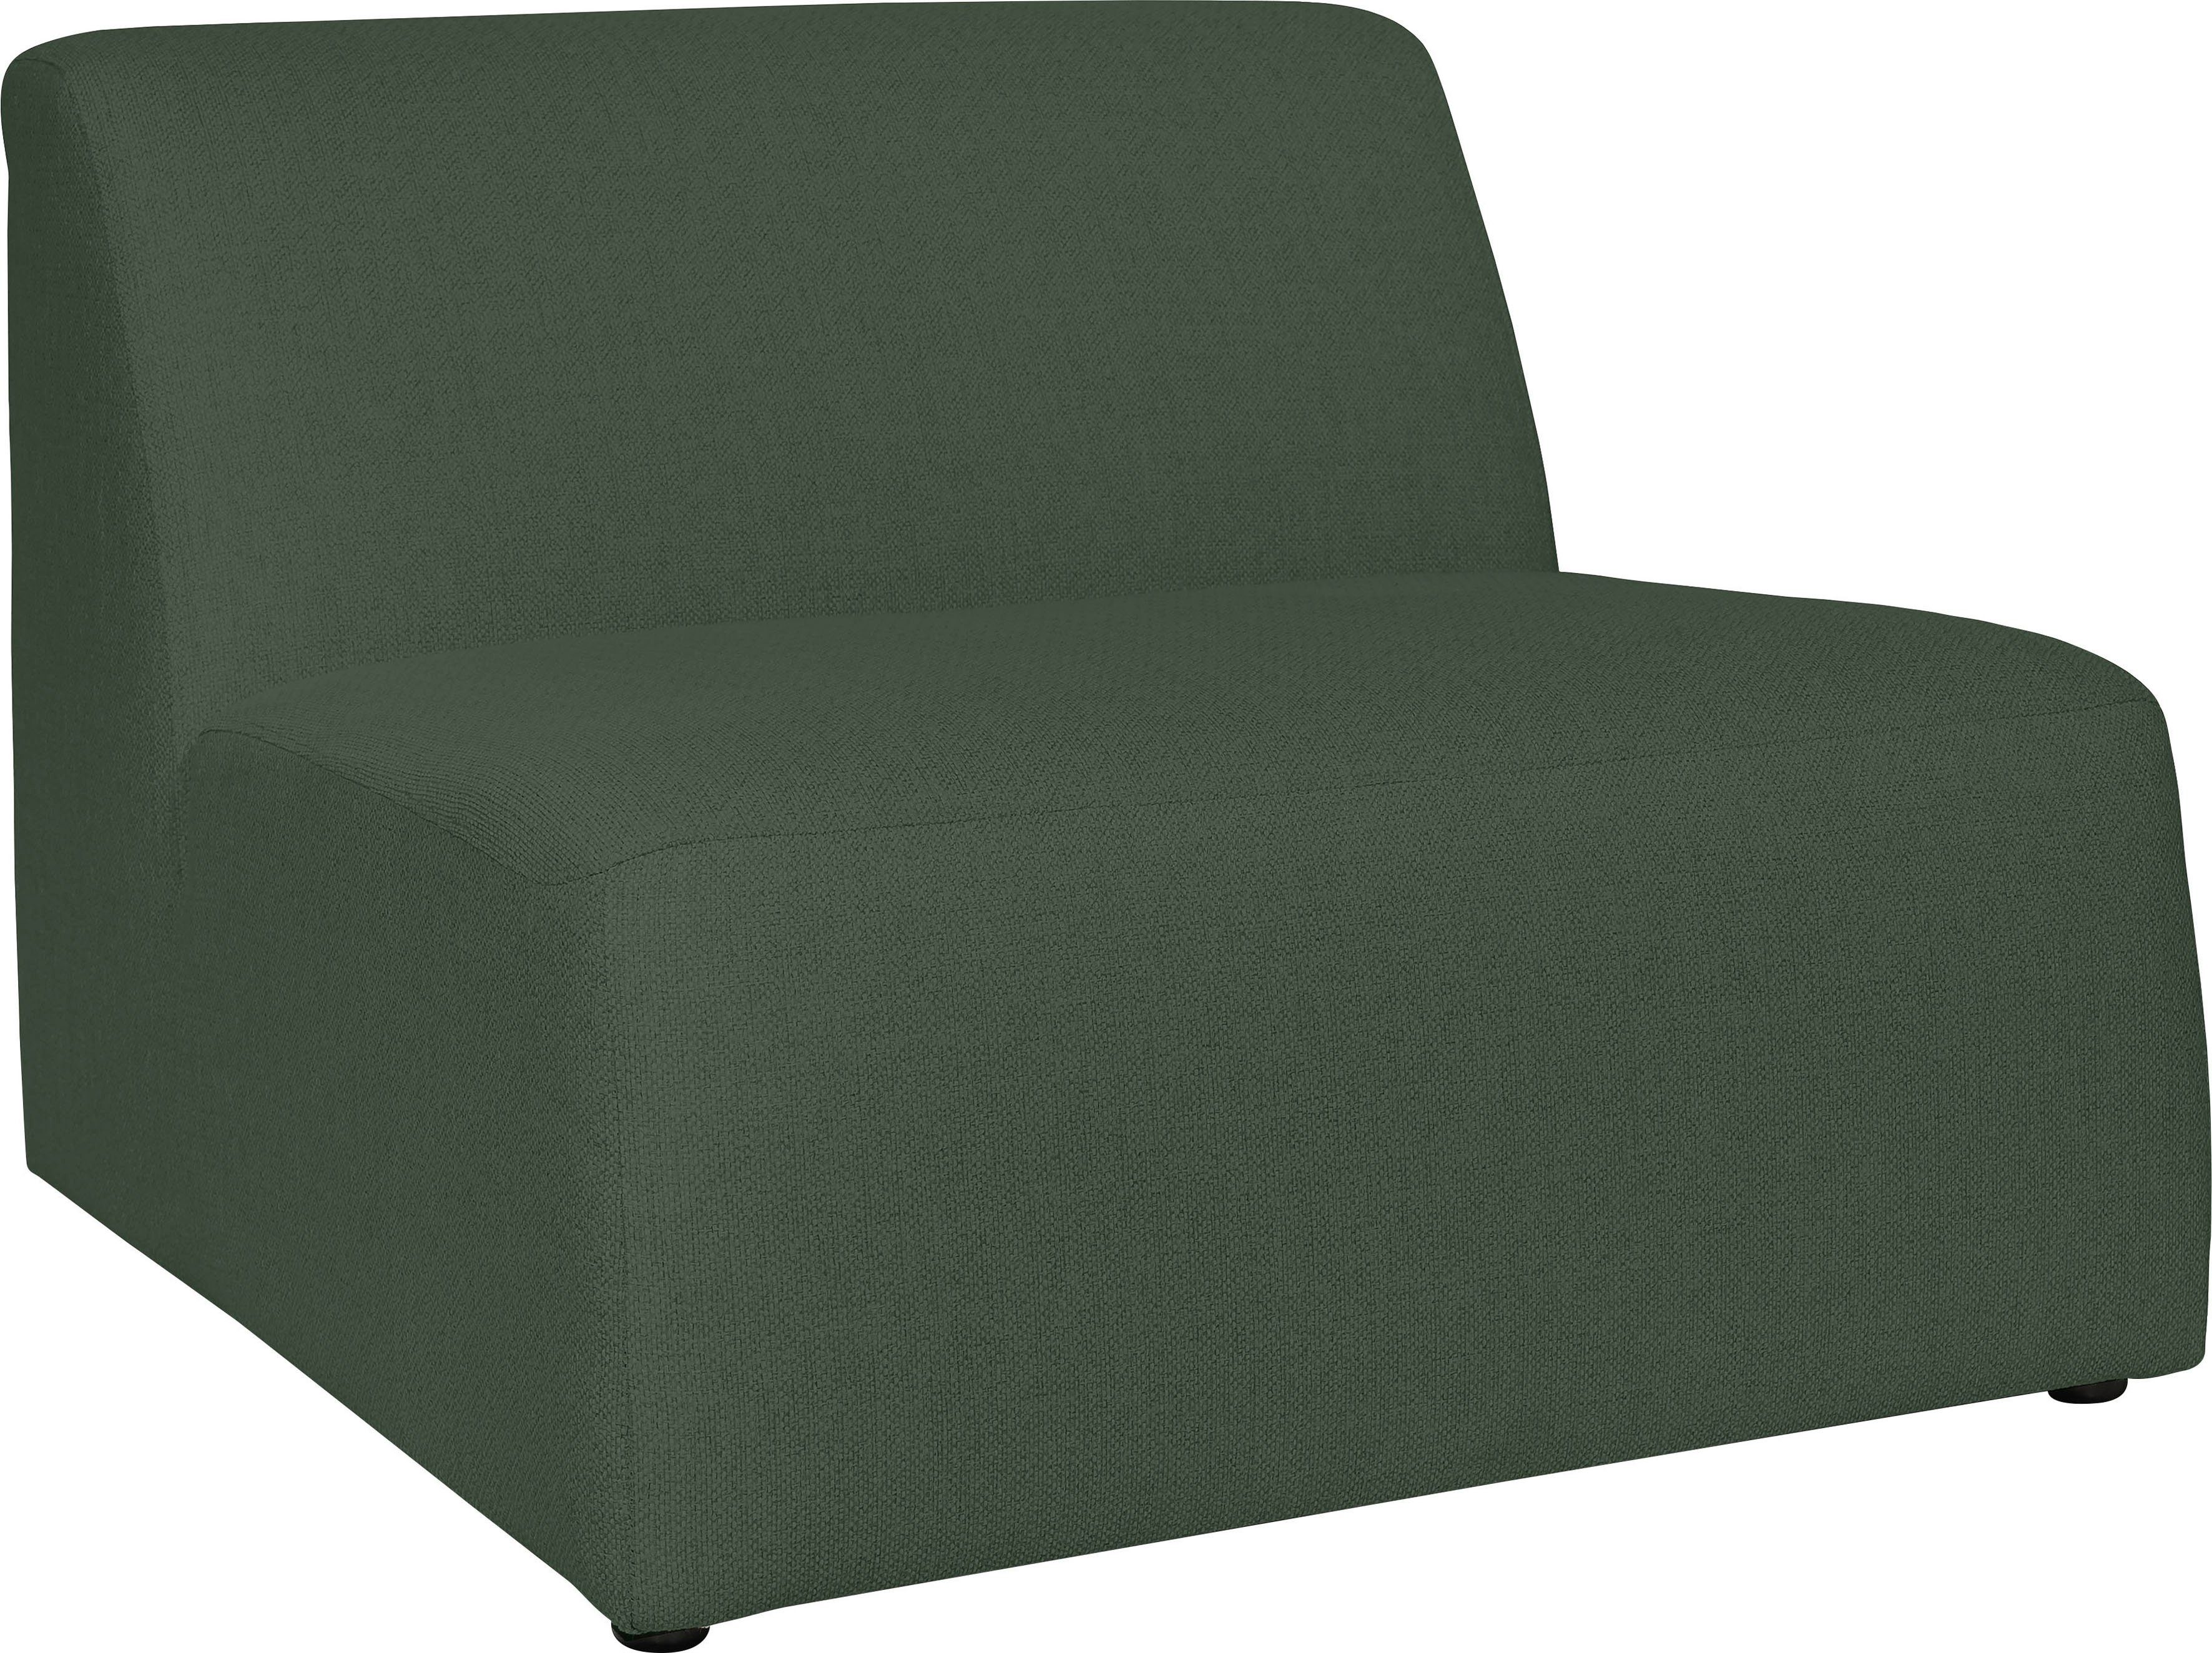 khaki Sofa-Mittelelement Koa, INOSIGN Komfort, Proportionen schöne angenehmer